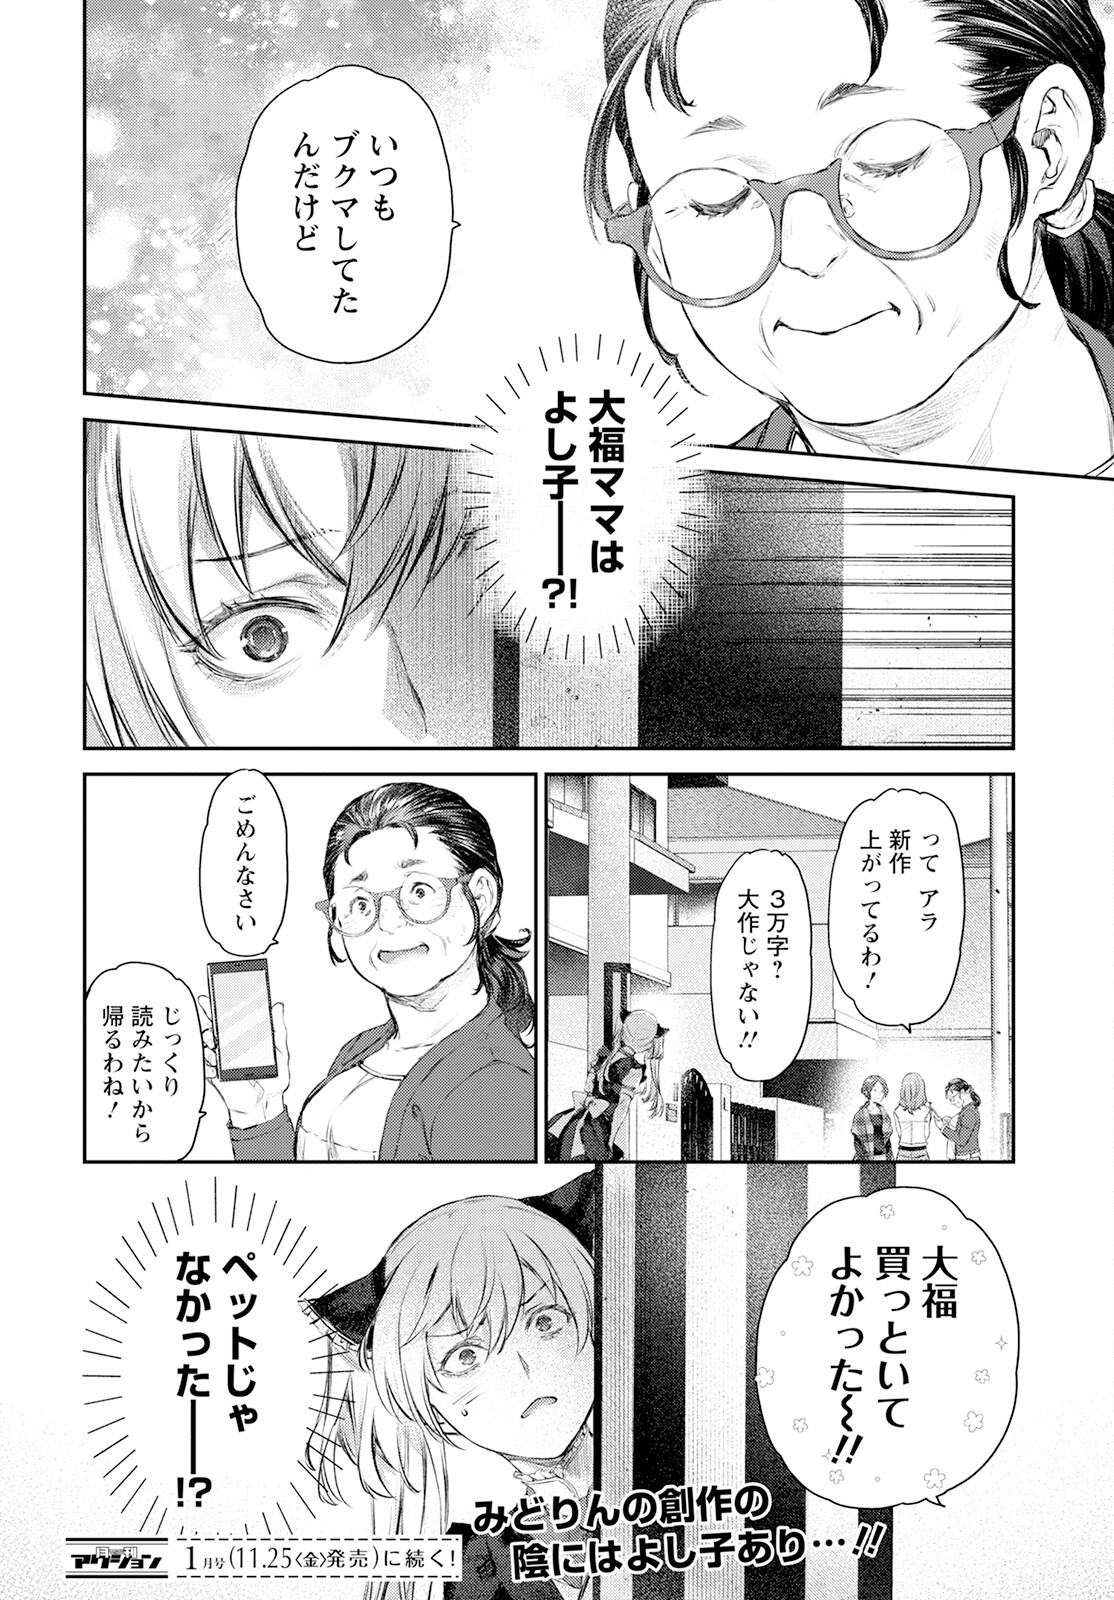 Uchi no Maid ga Uzasugiru! - Chapter 56 - Page 26